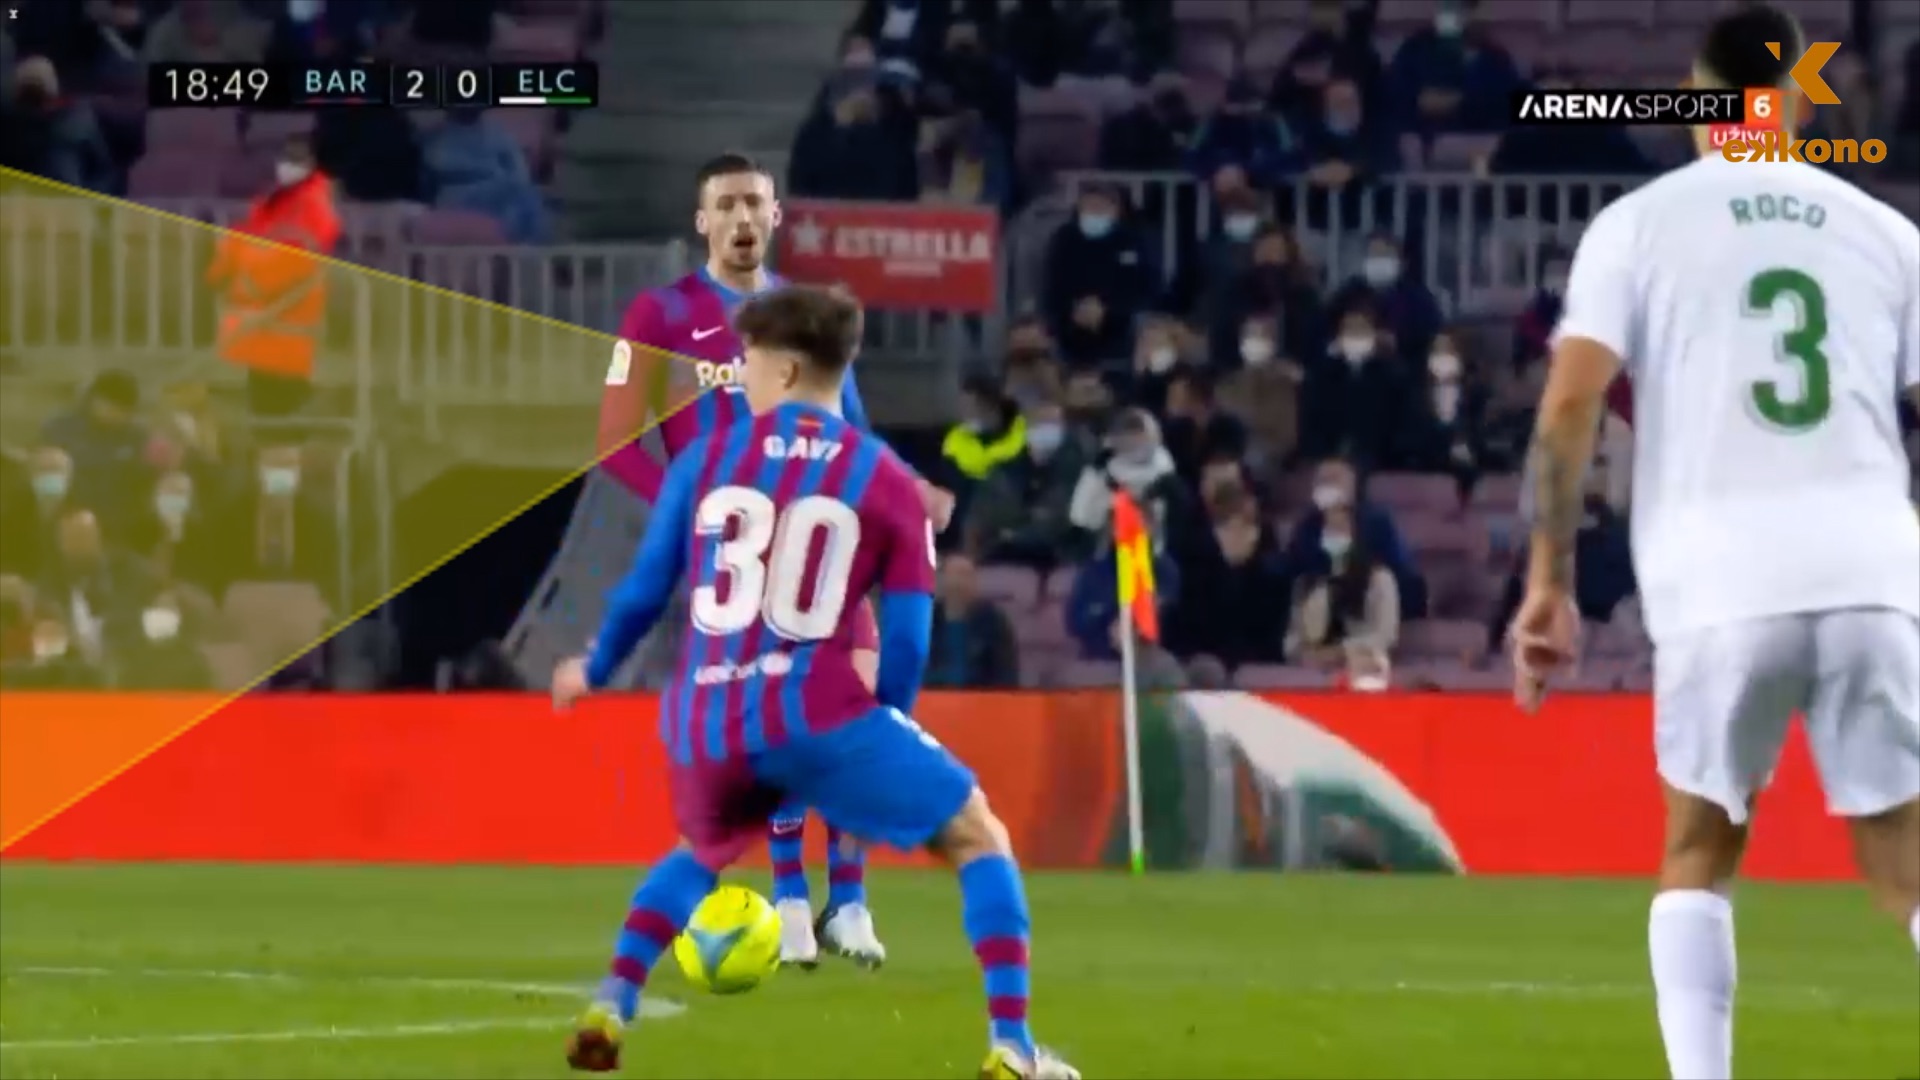 Pablo Gavi (FC Barcelona) showing his outstanding perception skills